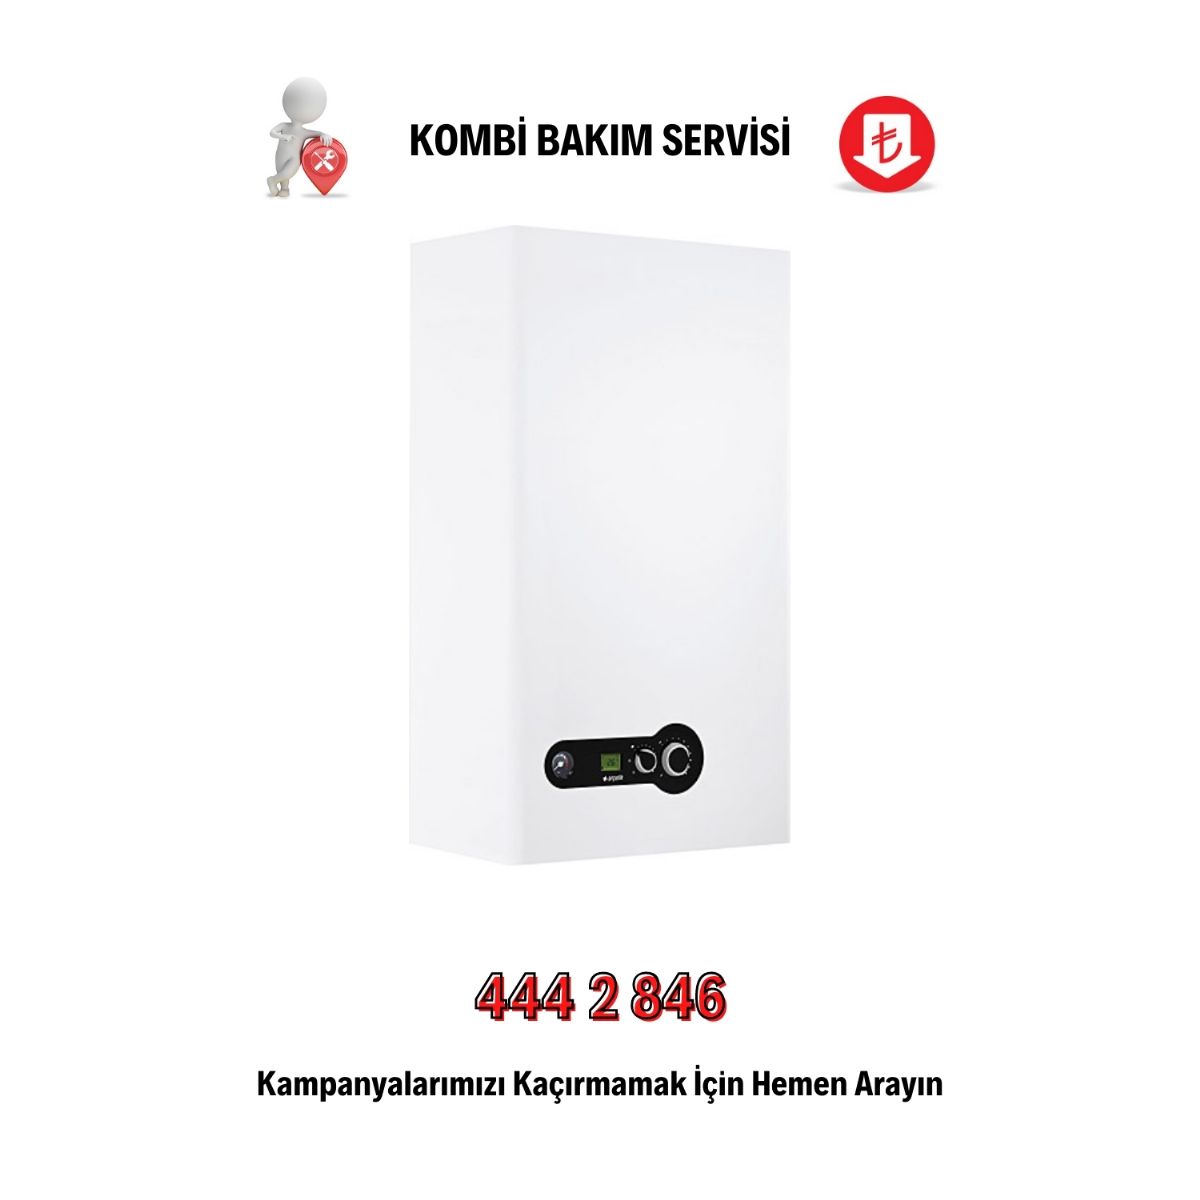 Kombi Bakım Servisi-Yuvam Teknik-444 2 846